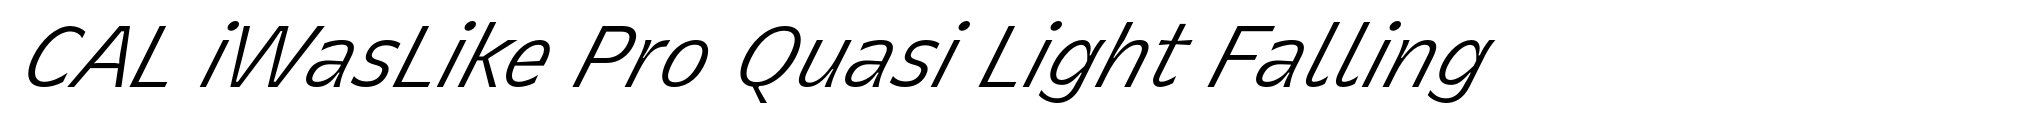 CAL iWasLike Pro Quasi Light Falling image